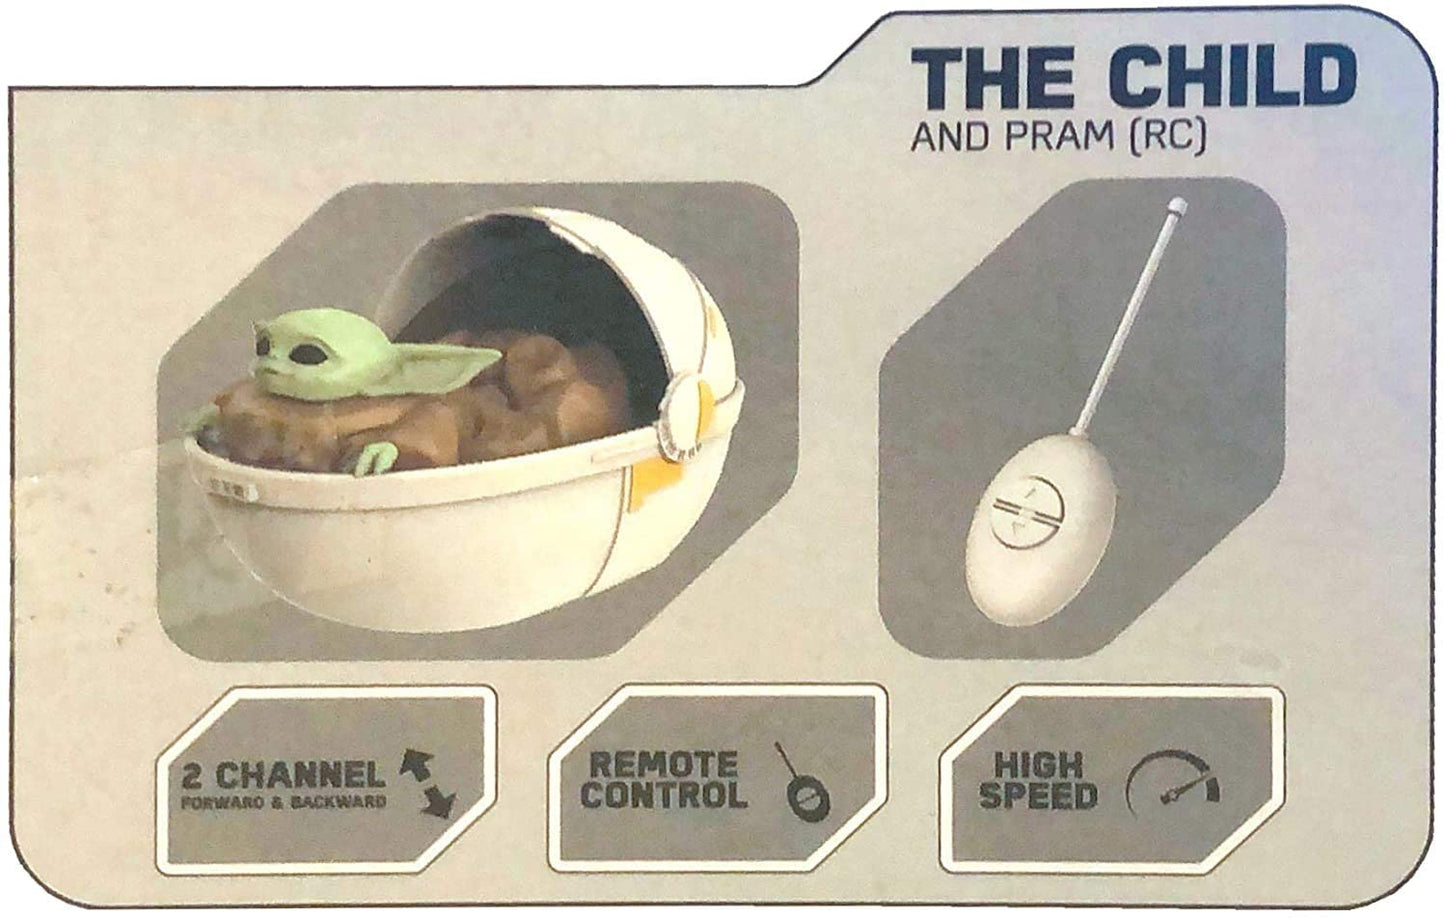 Mandalorian - Juguete de Baby Yoda, The Child en Cochecito, Coche en forma de cuna con control remoto